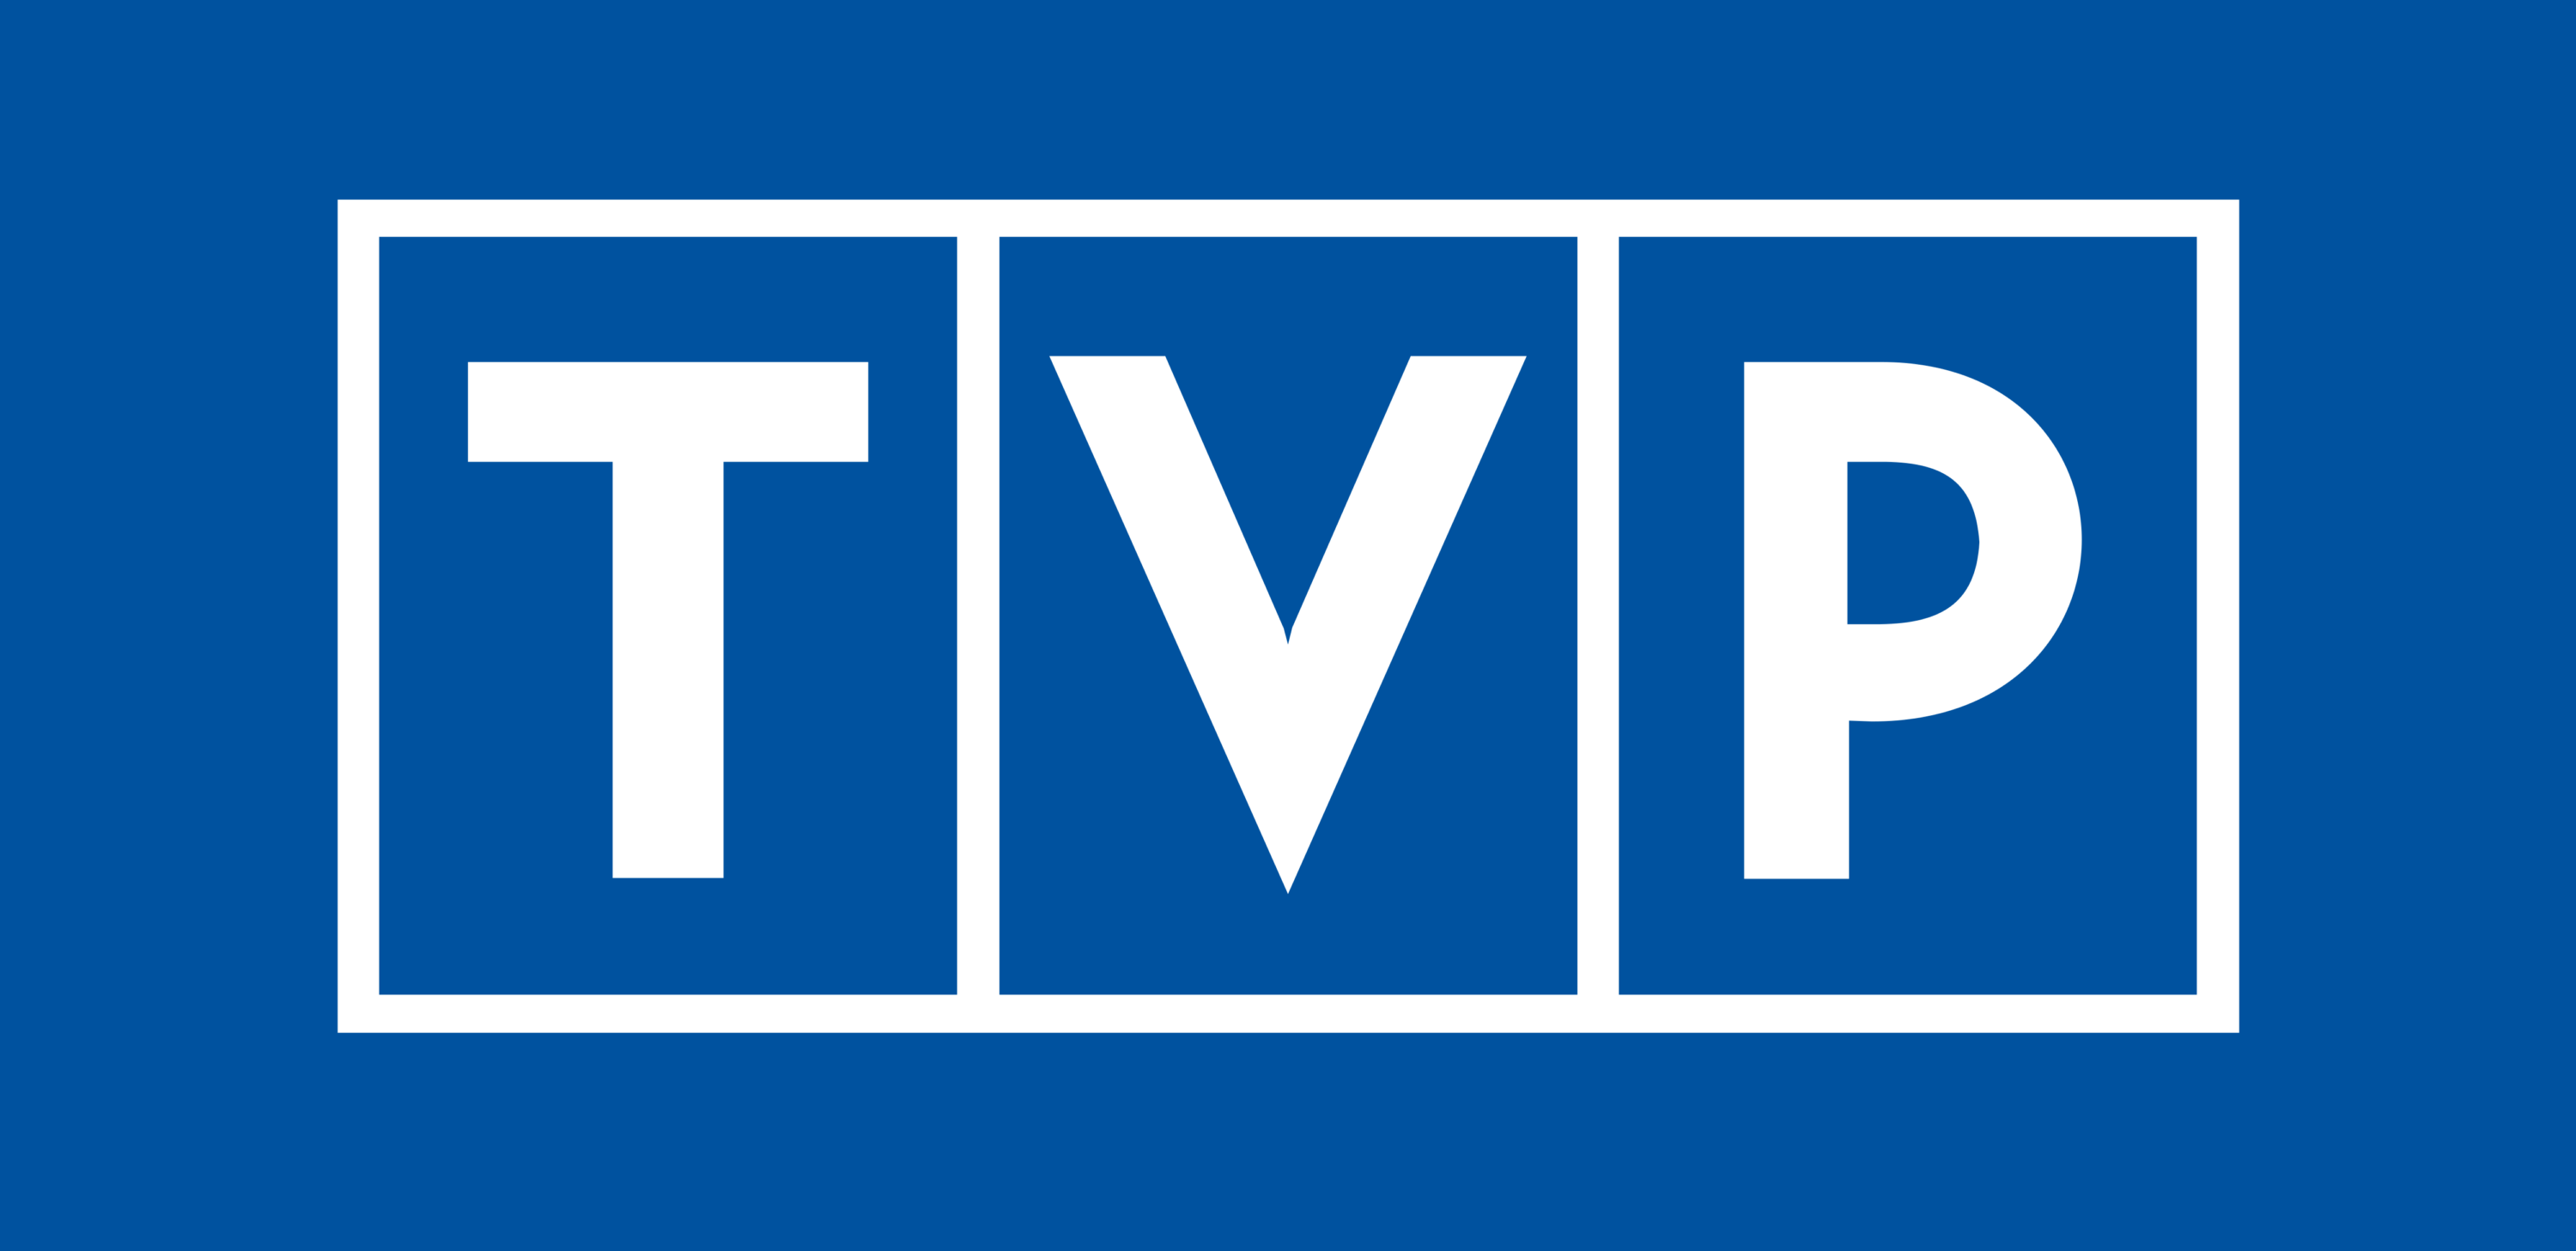 Telewizja Polska Logo 2003